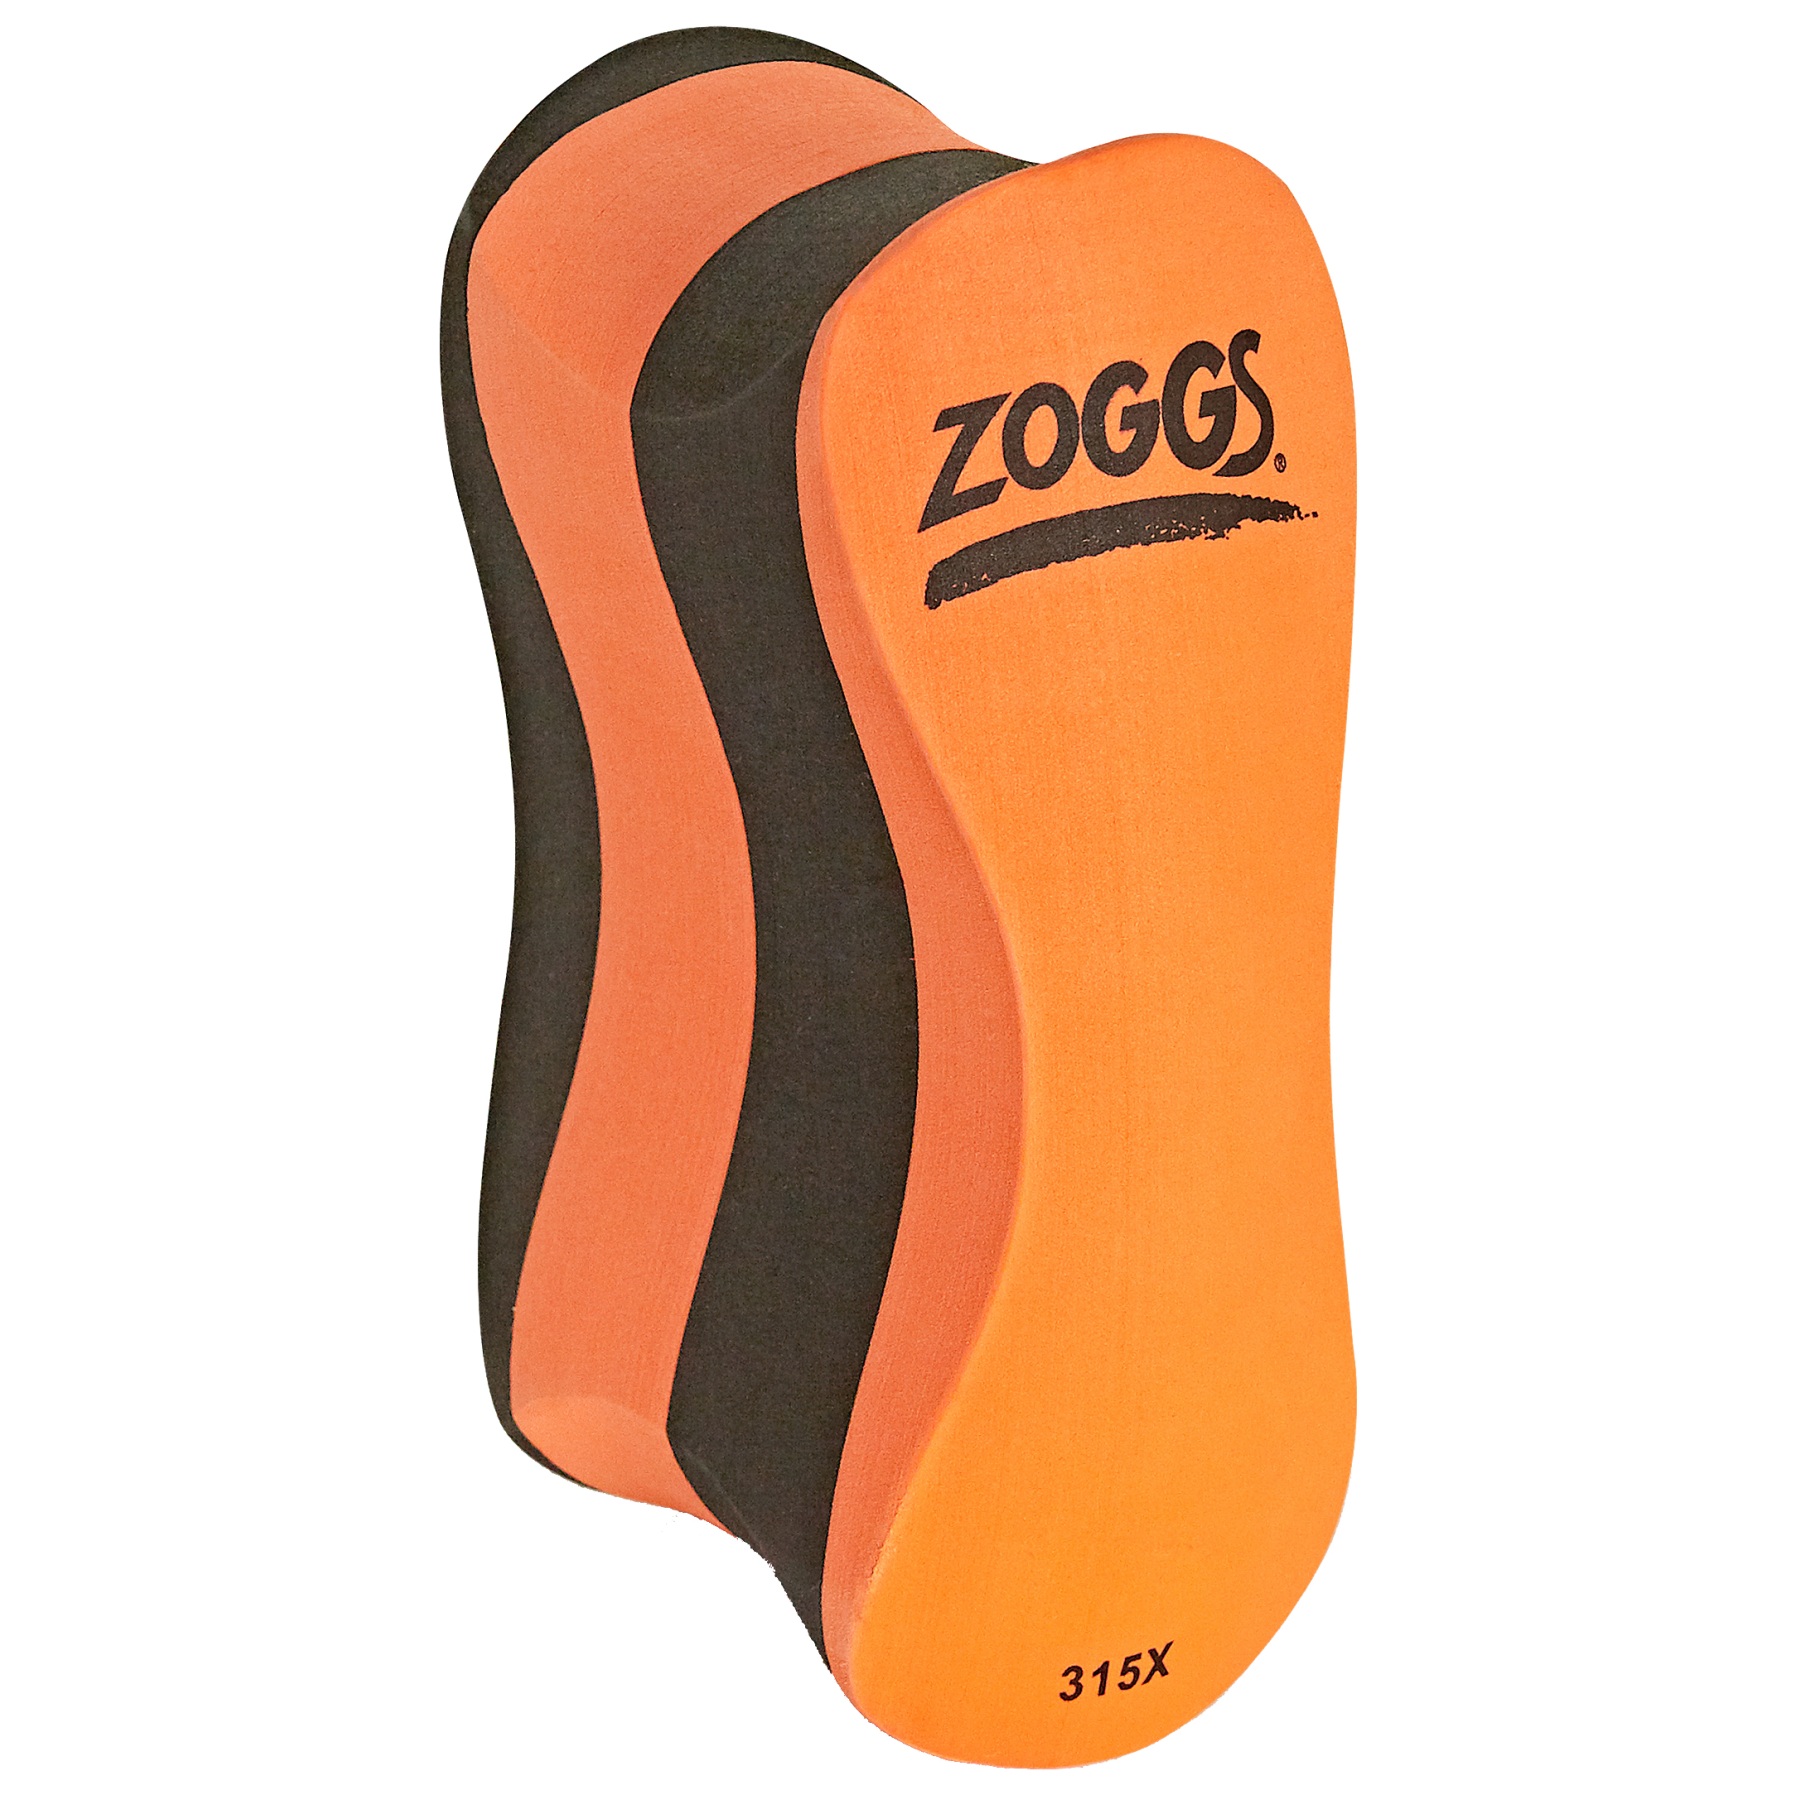 Productfoto van Zoggs Pull Buoy - orange